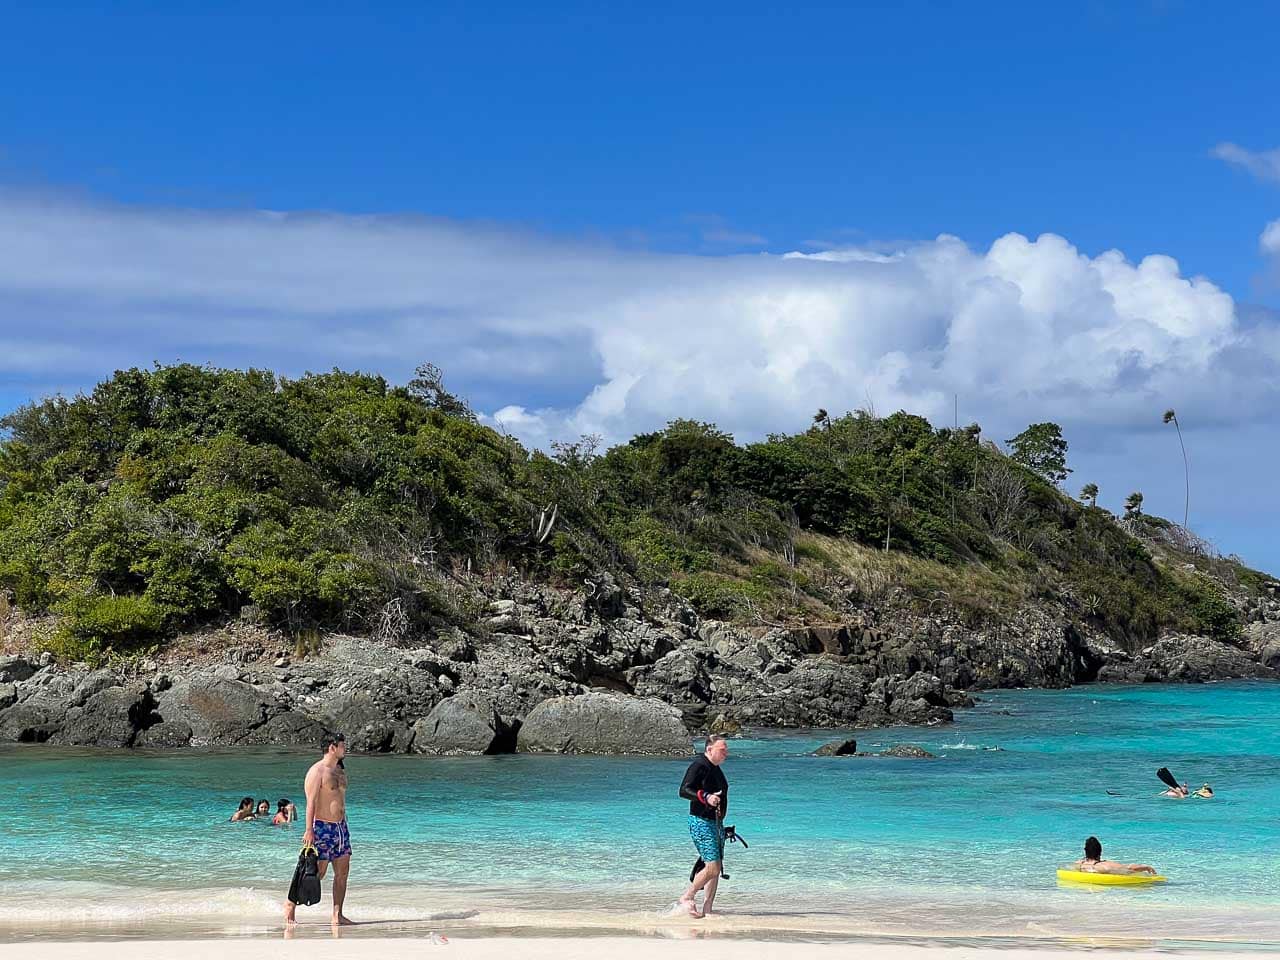 Beach-goers at Trunk Bay in Virgin Islands National Park